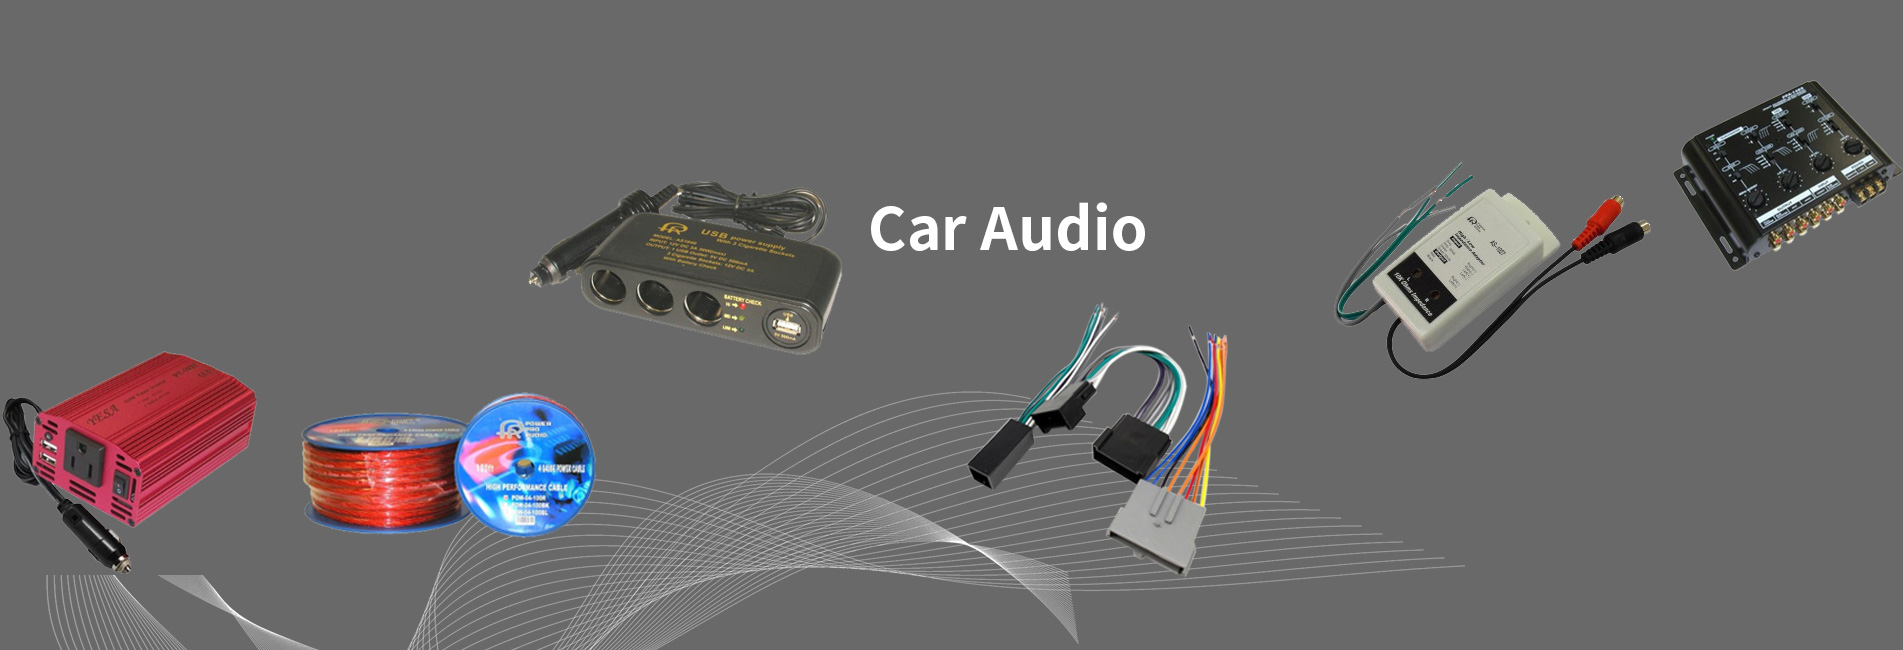 Car Audio banner2